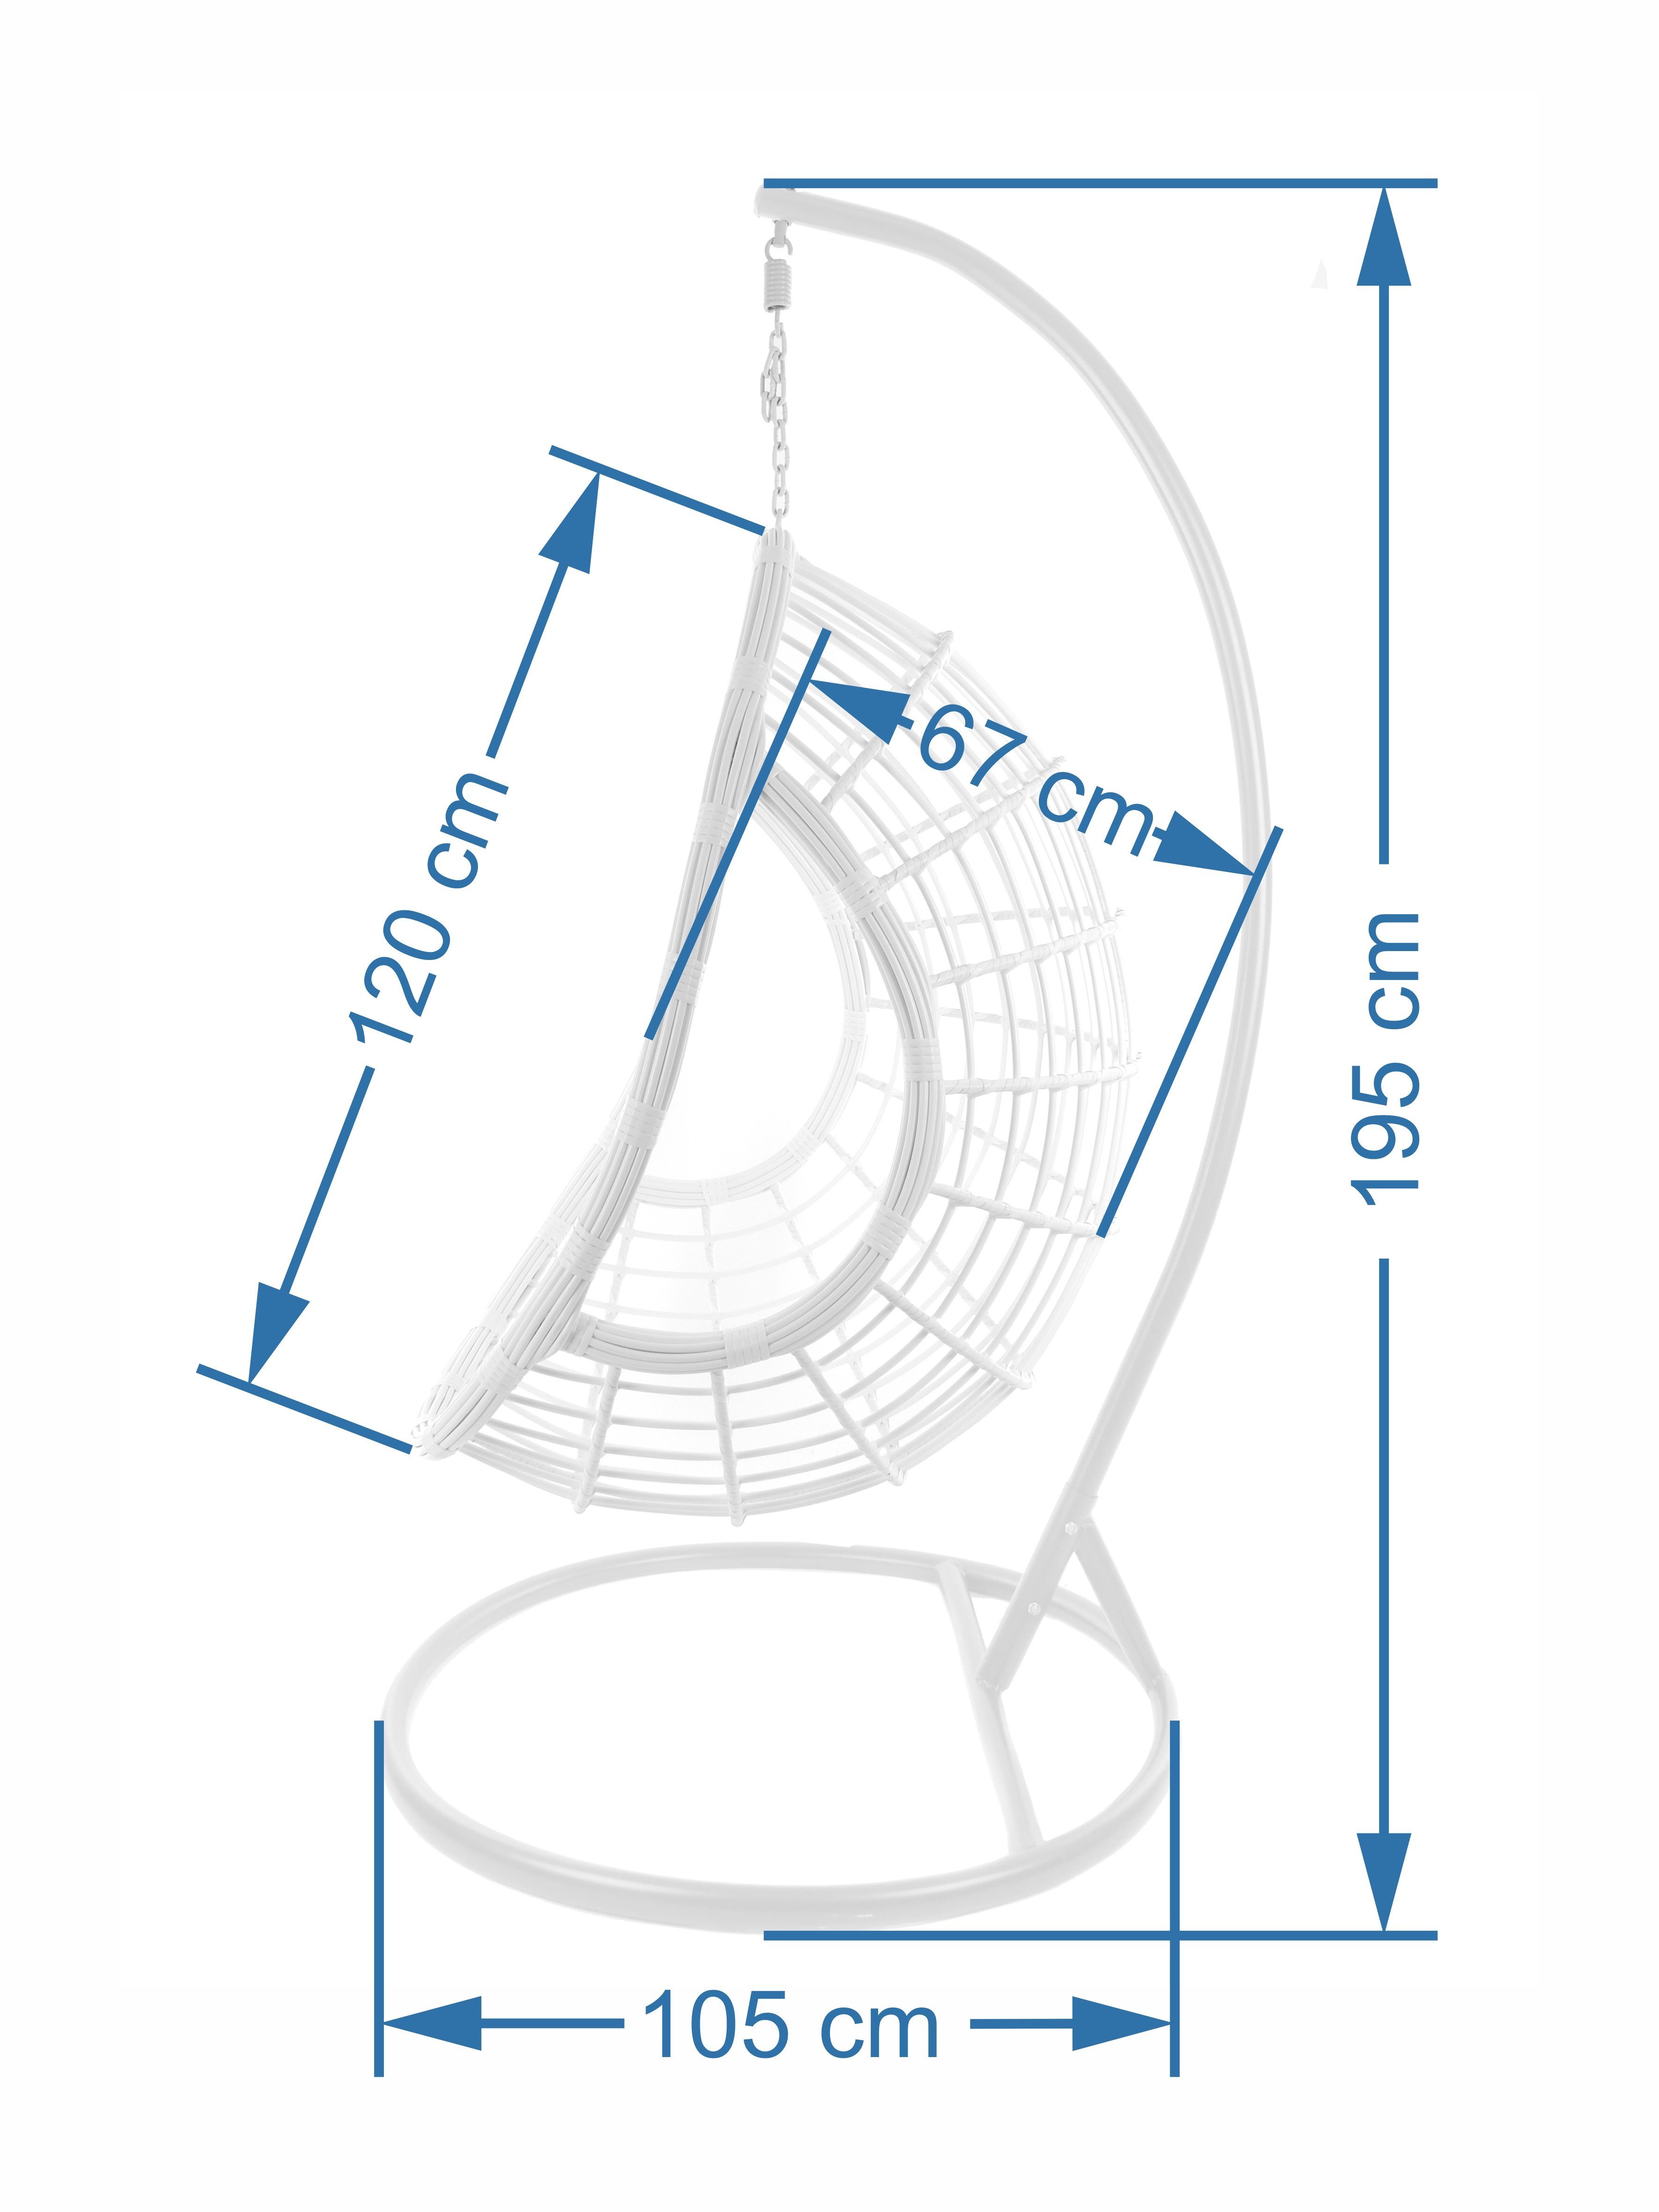 KIDEO Hängesessel Hängesessel moderne grau, inklusive tropical grau, garden) PALMANOVA Loungemöbel, blattmuster (5101 Hängestuhl in und Kissen Gestell